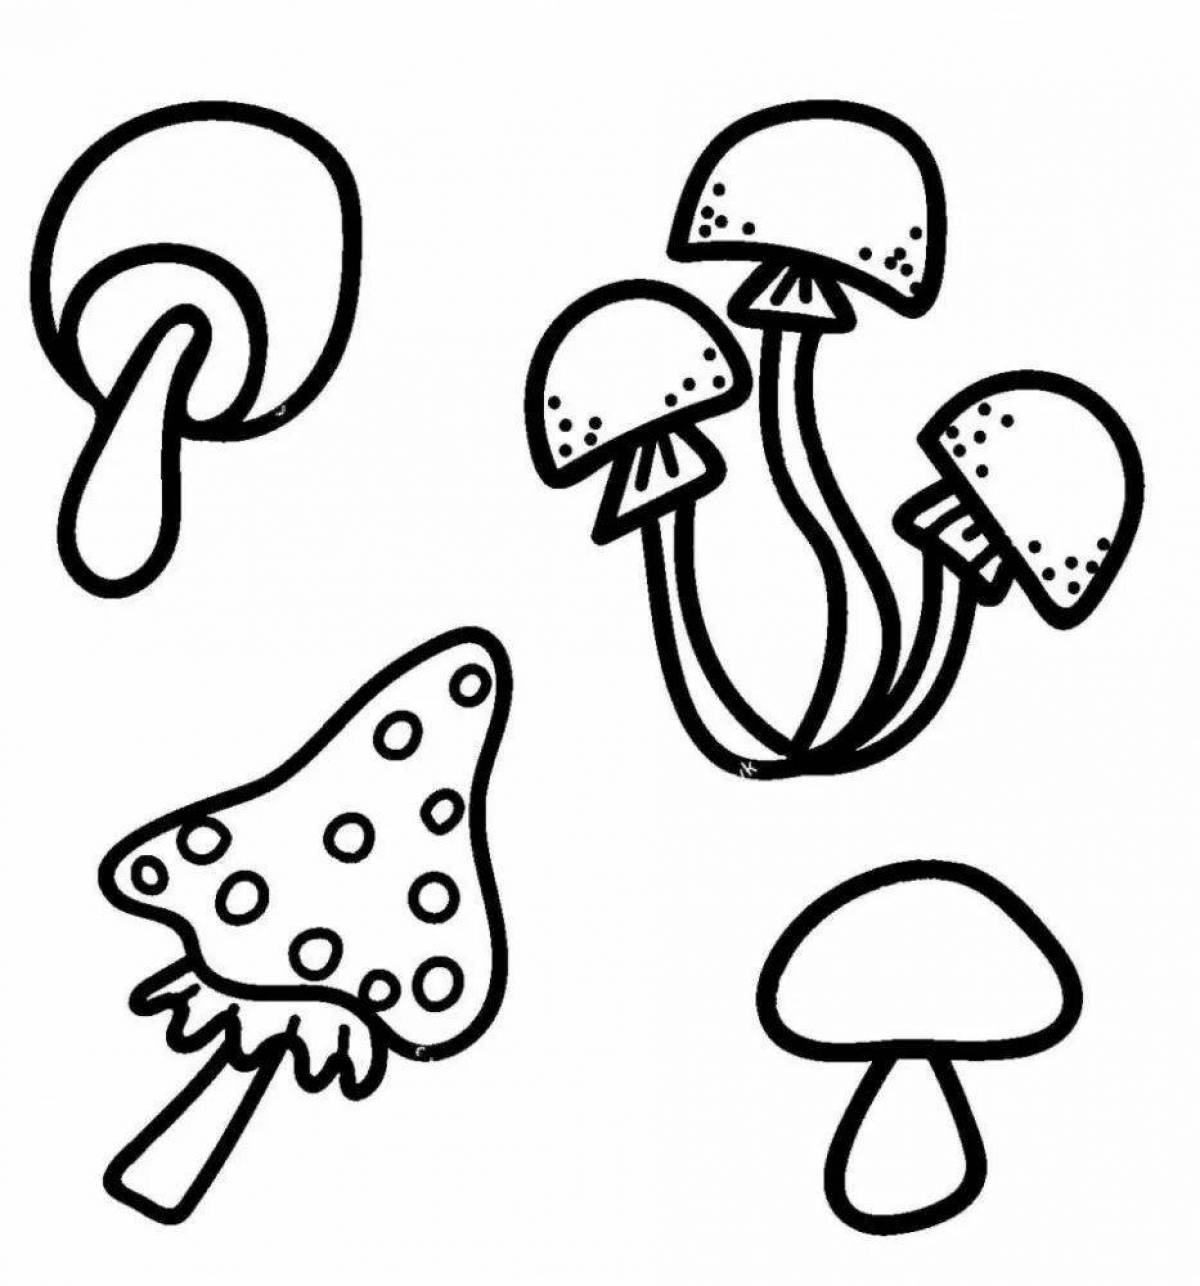 Shiny edible mushrooms for kids